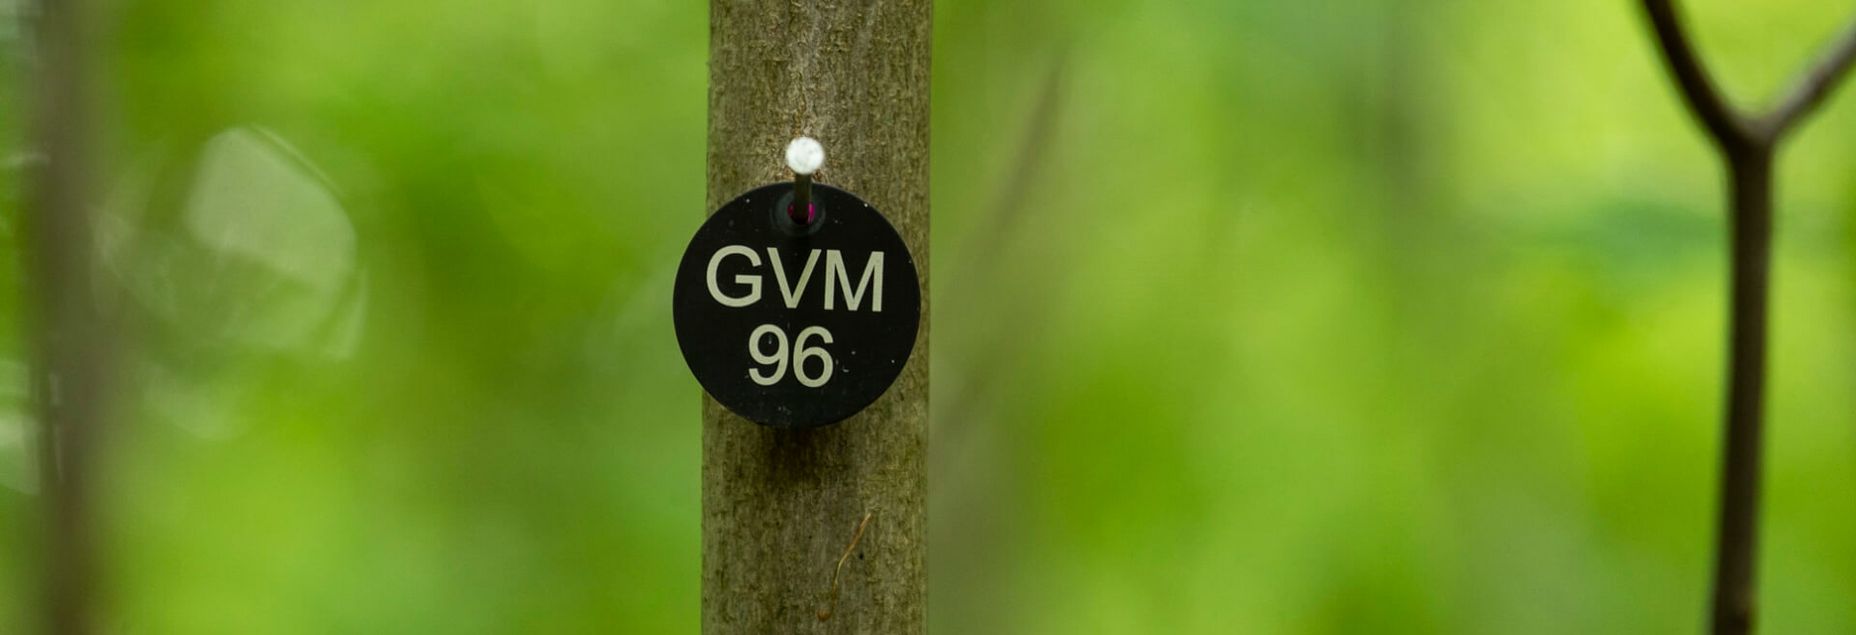 Baum GVM 96 - Plakette